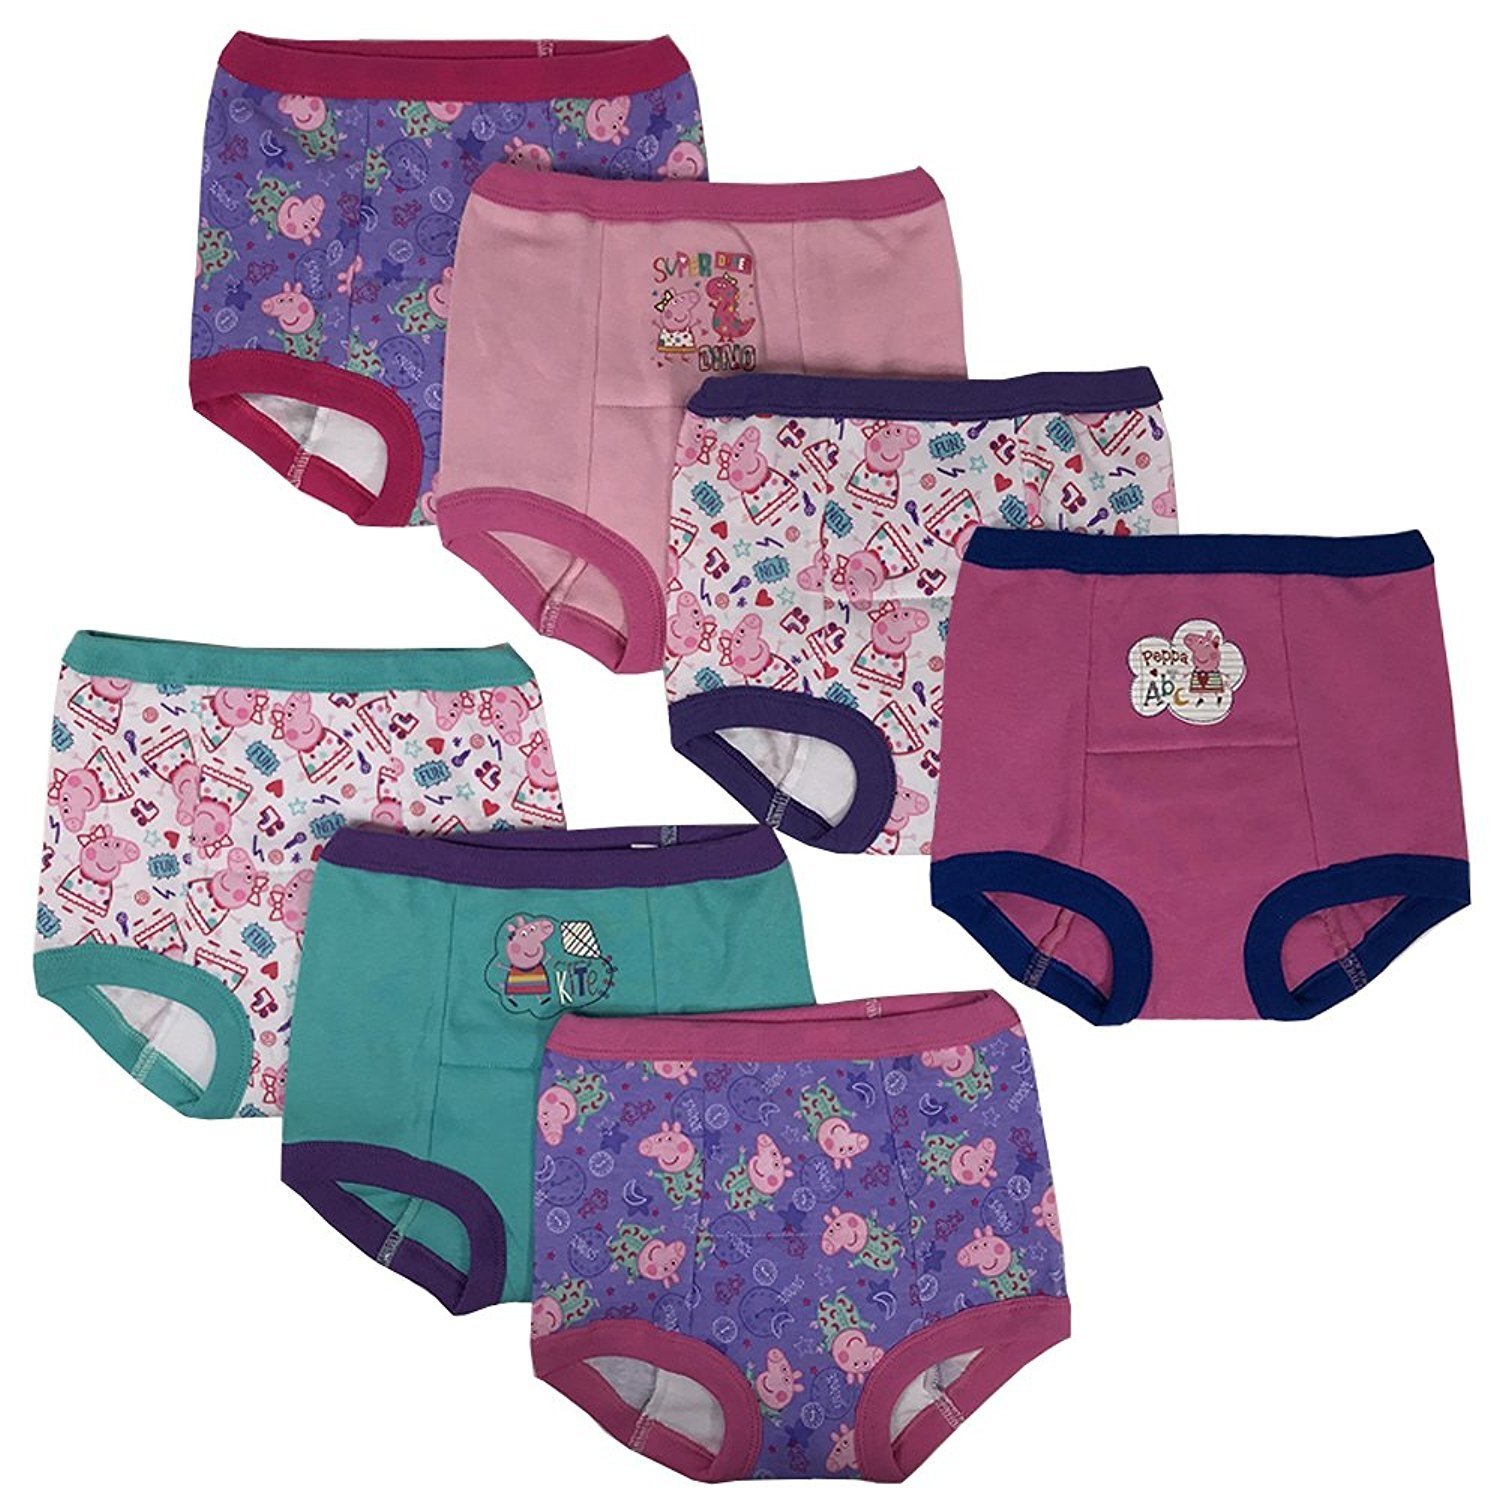 Peppa Pig Girls Potty Training Pants Panties 7-pack Underwear Toddler